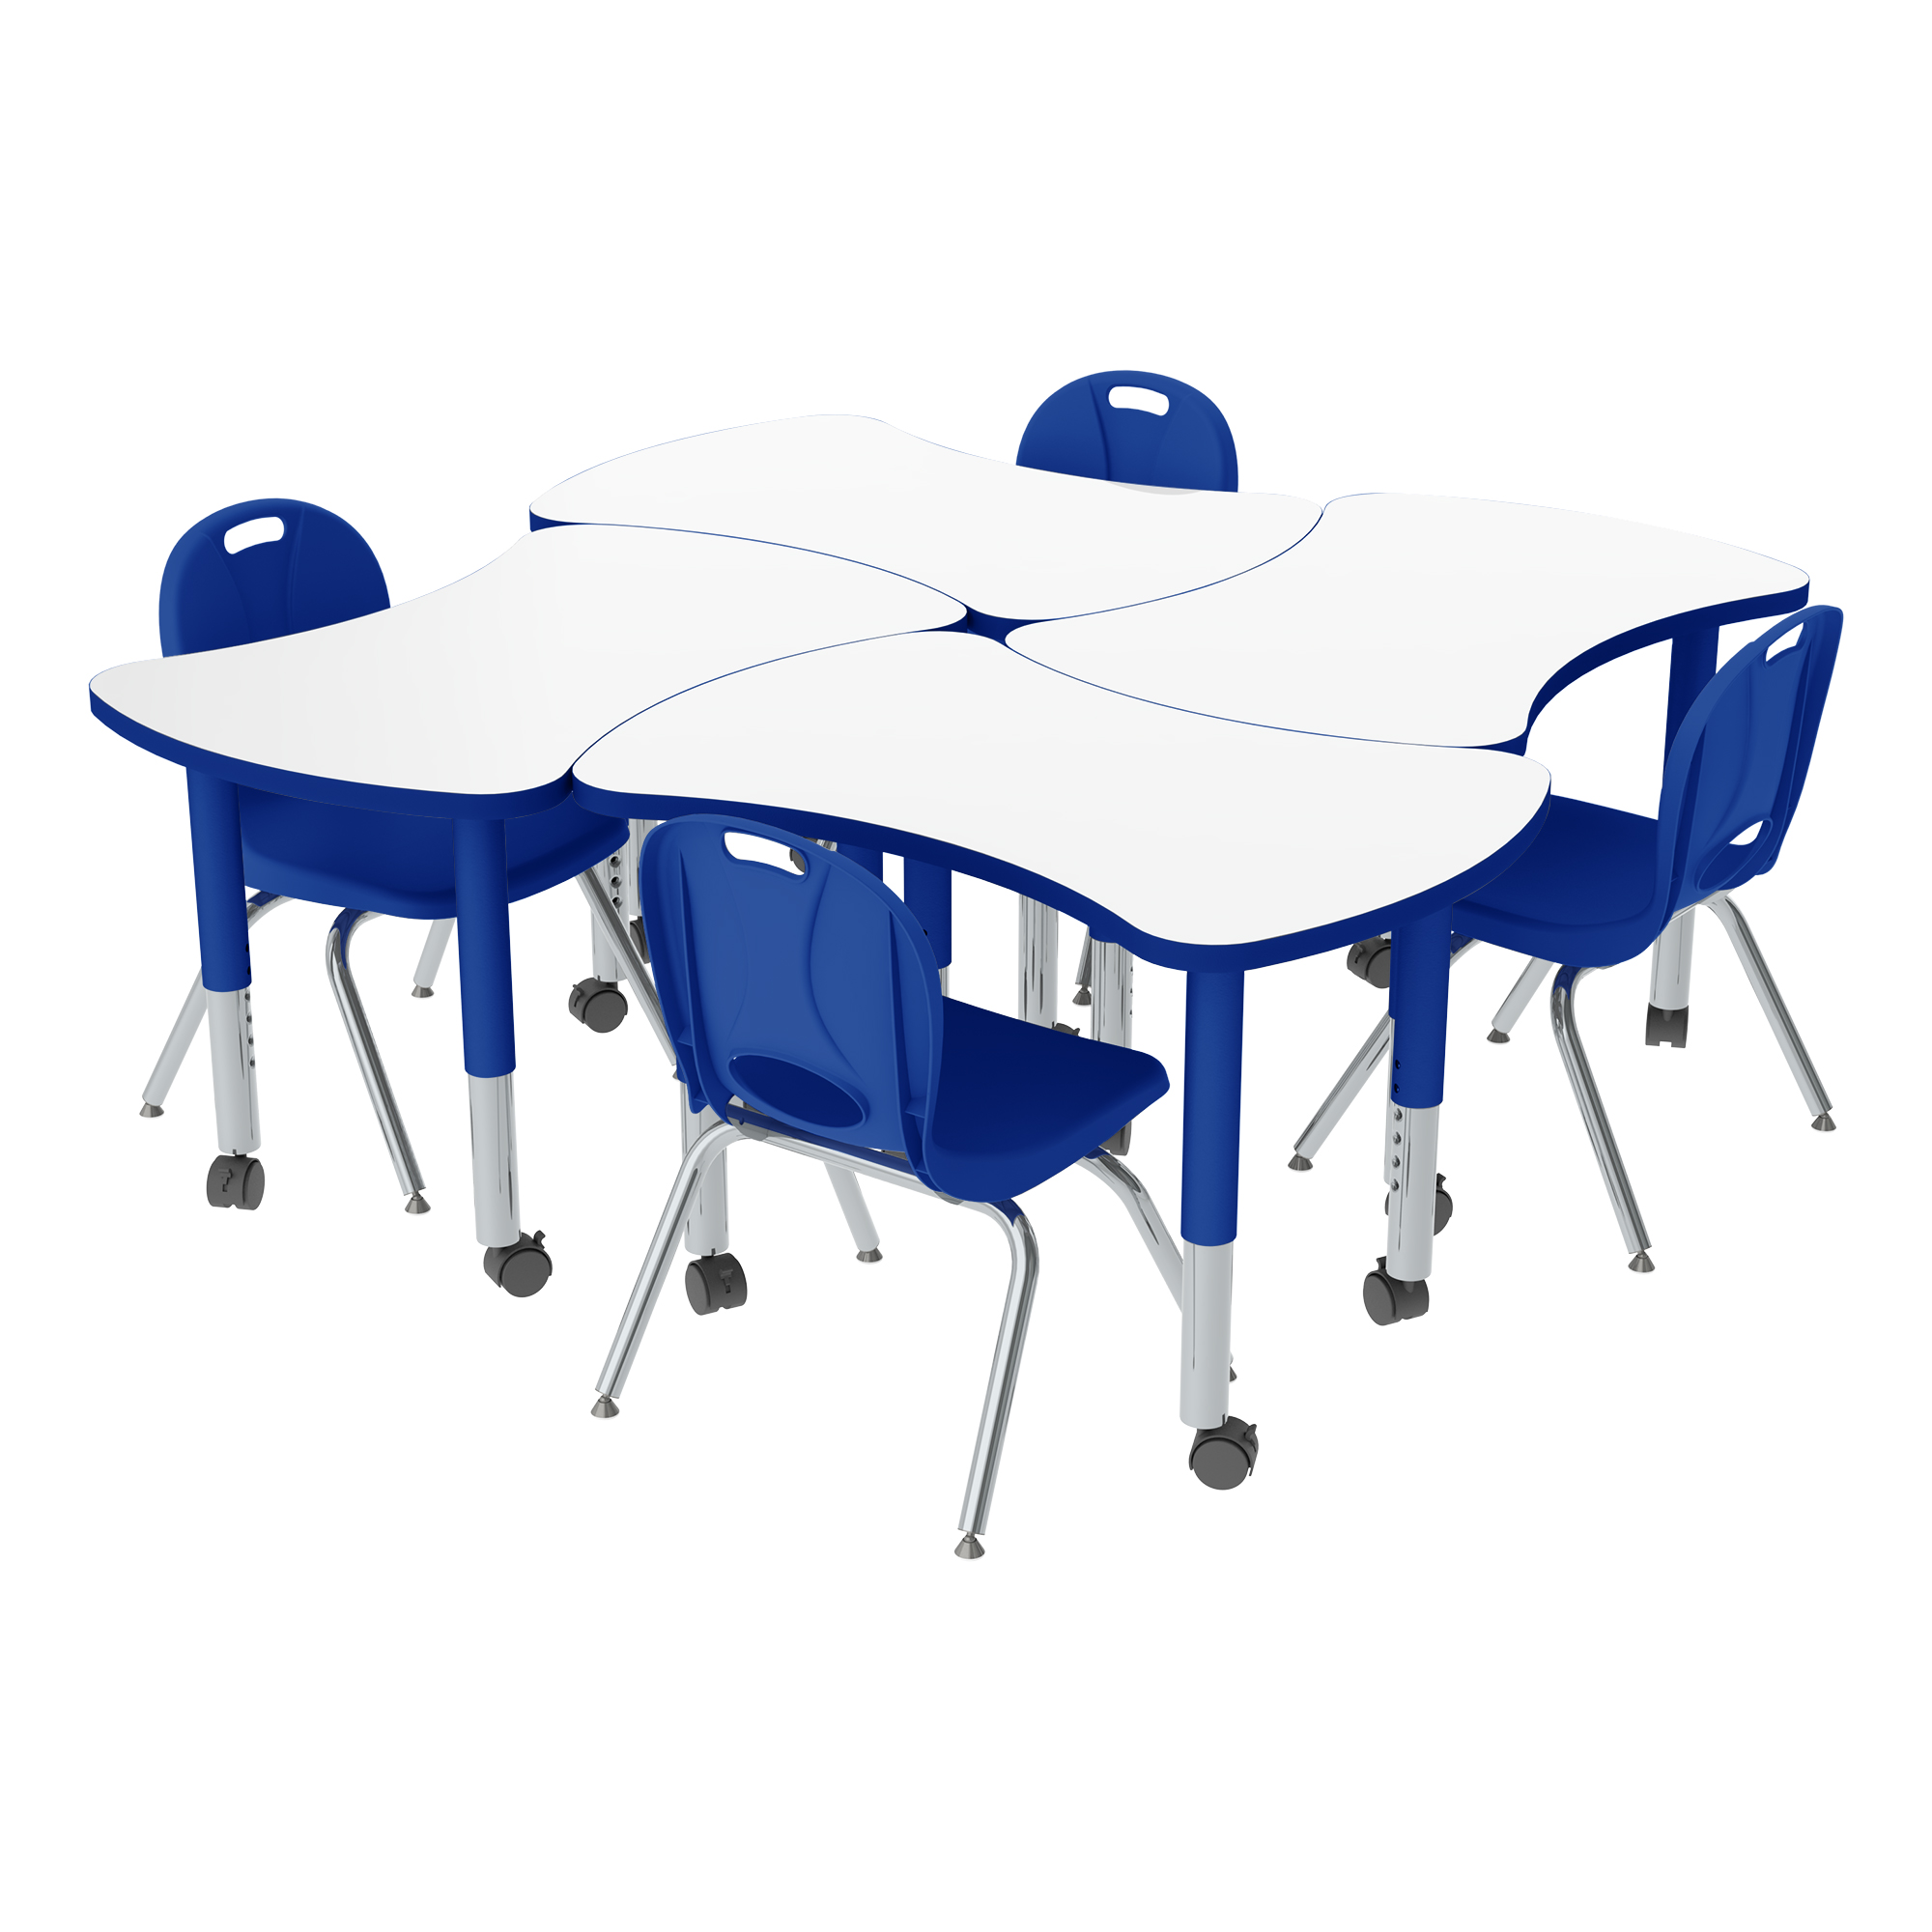 Sprogs Preschool Bow Tie Mobile Collaborative Table W Whiteboard